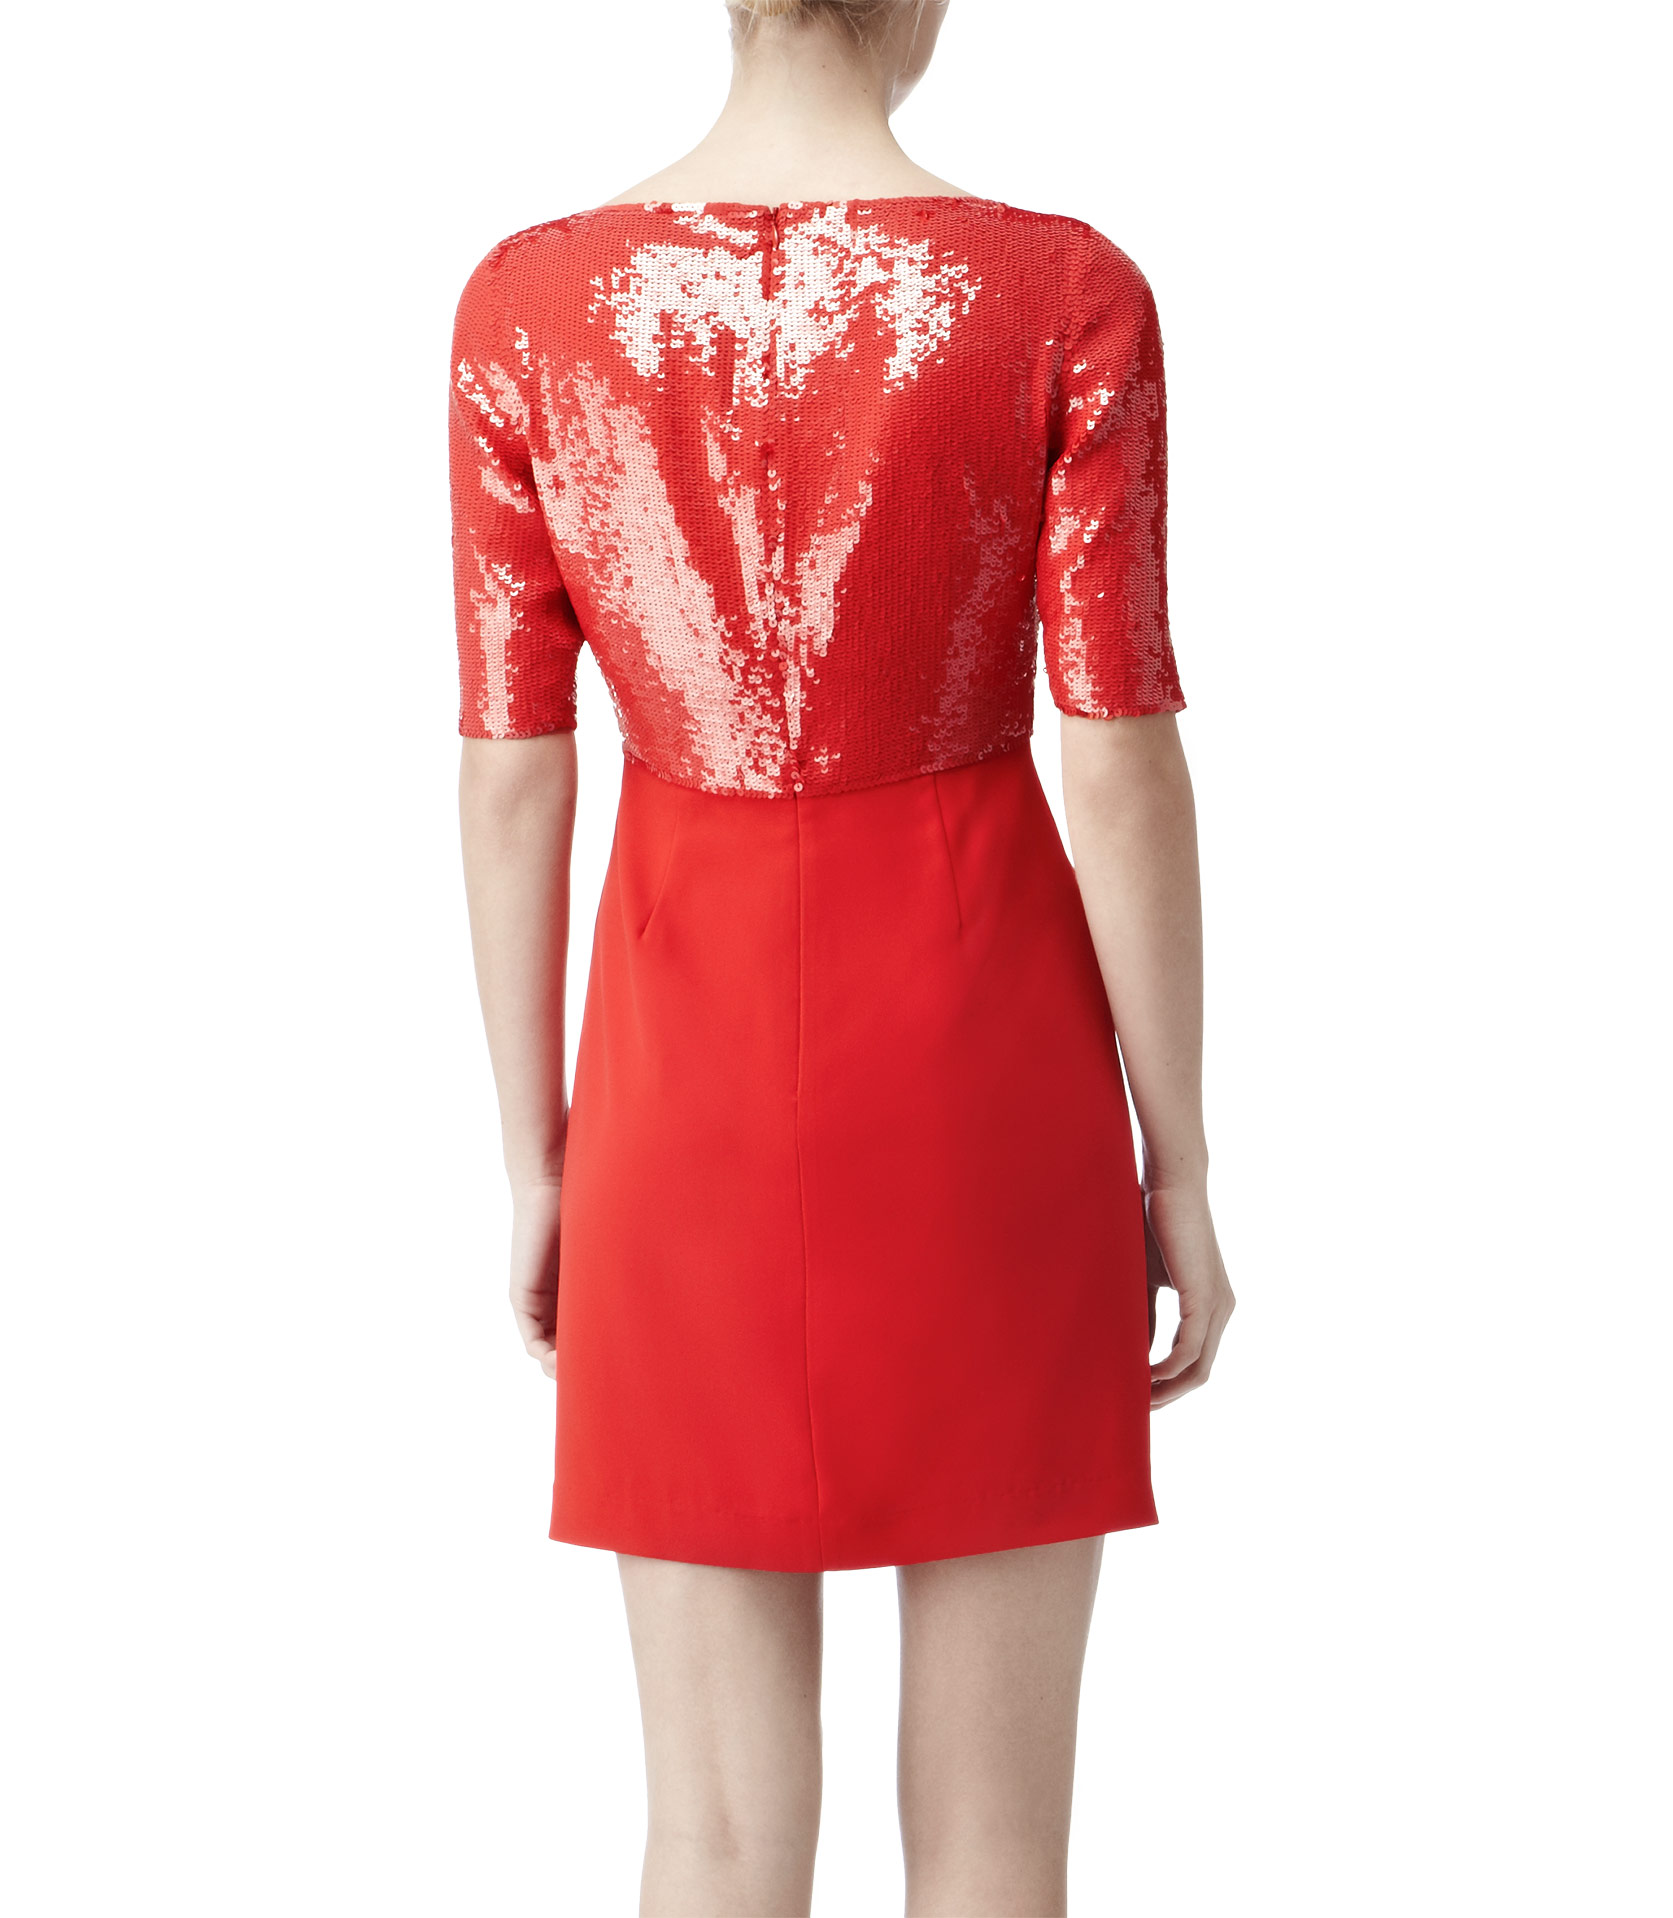 Reiss Sequin Shift Dress in Red | Lyst UK